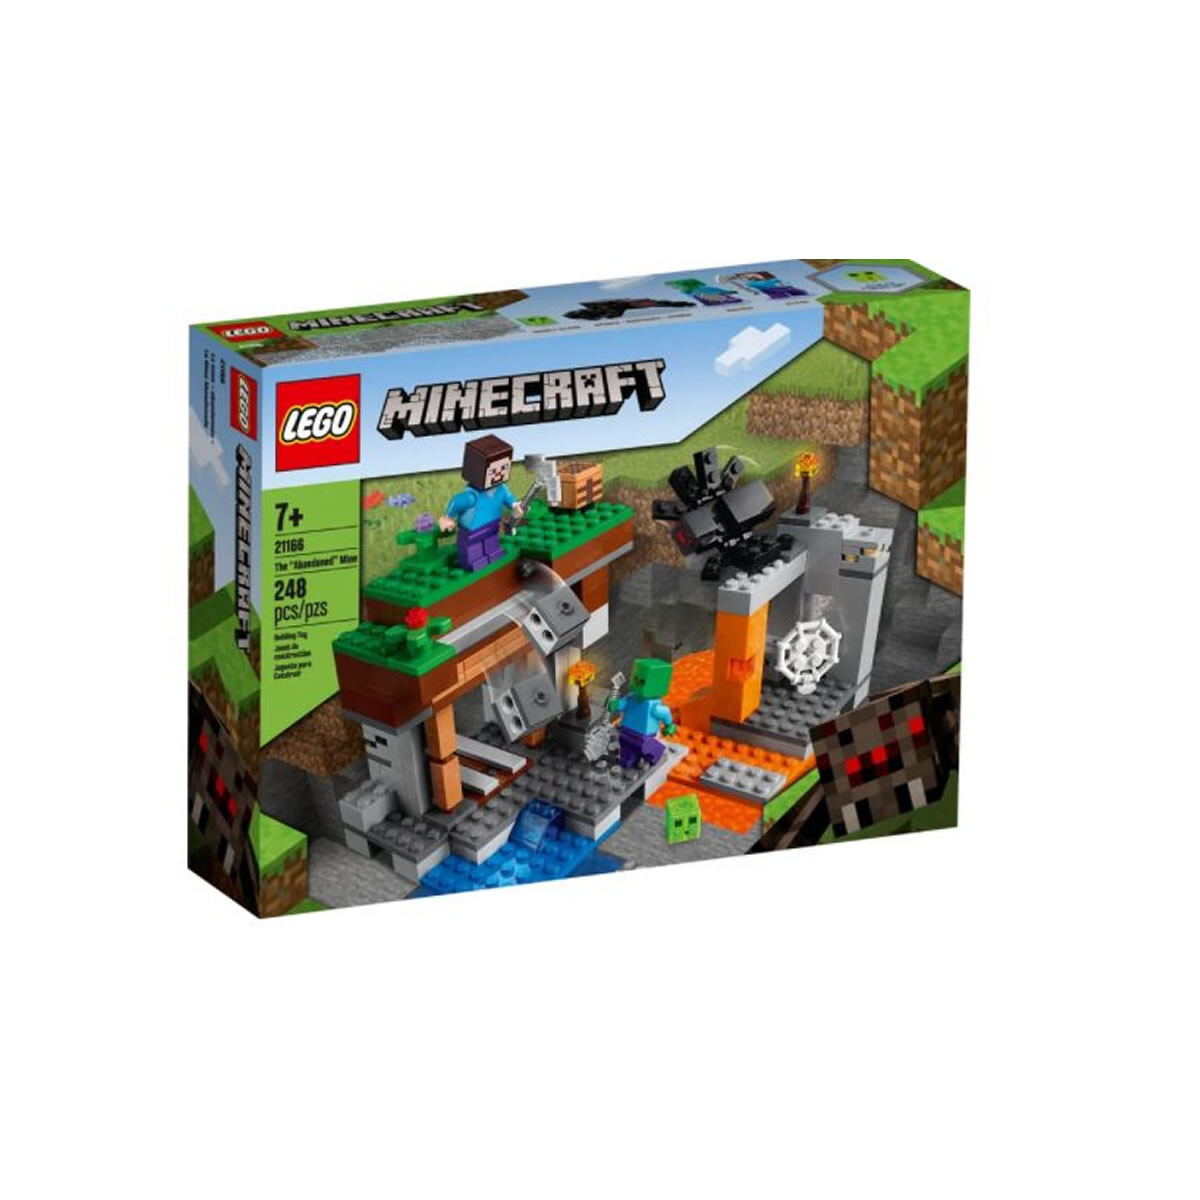 LEGO MINECRAFT Mina Abandonada 248 Pzs 